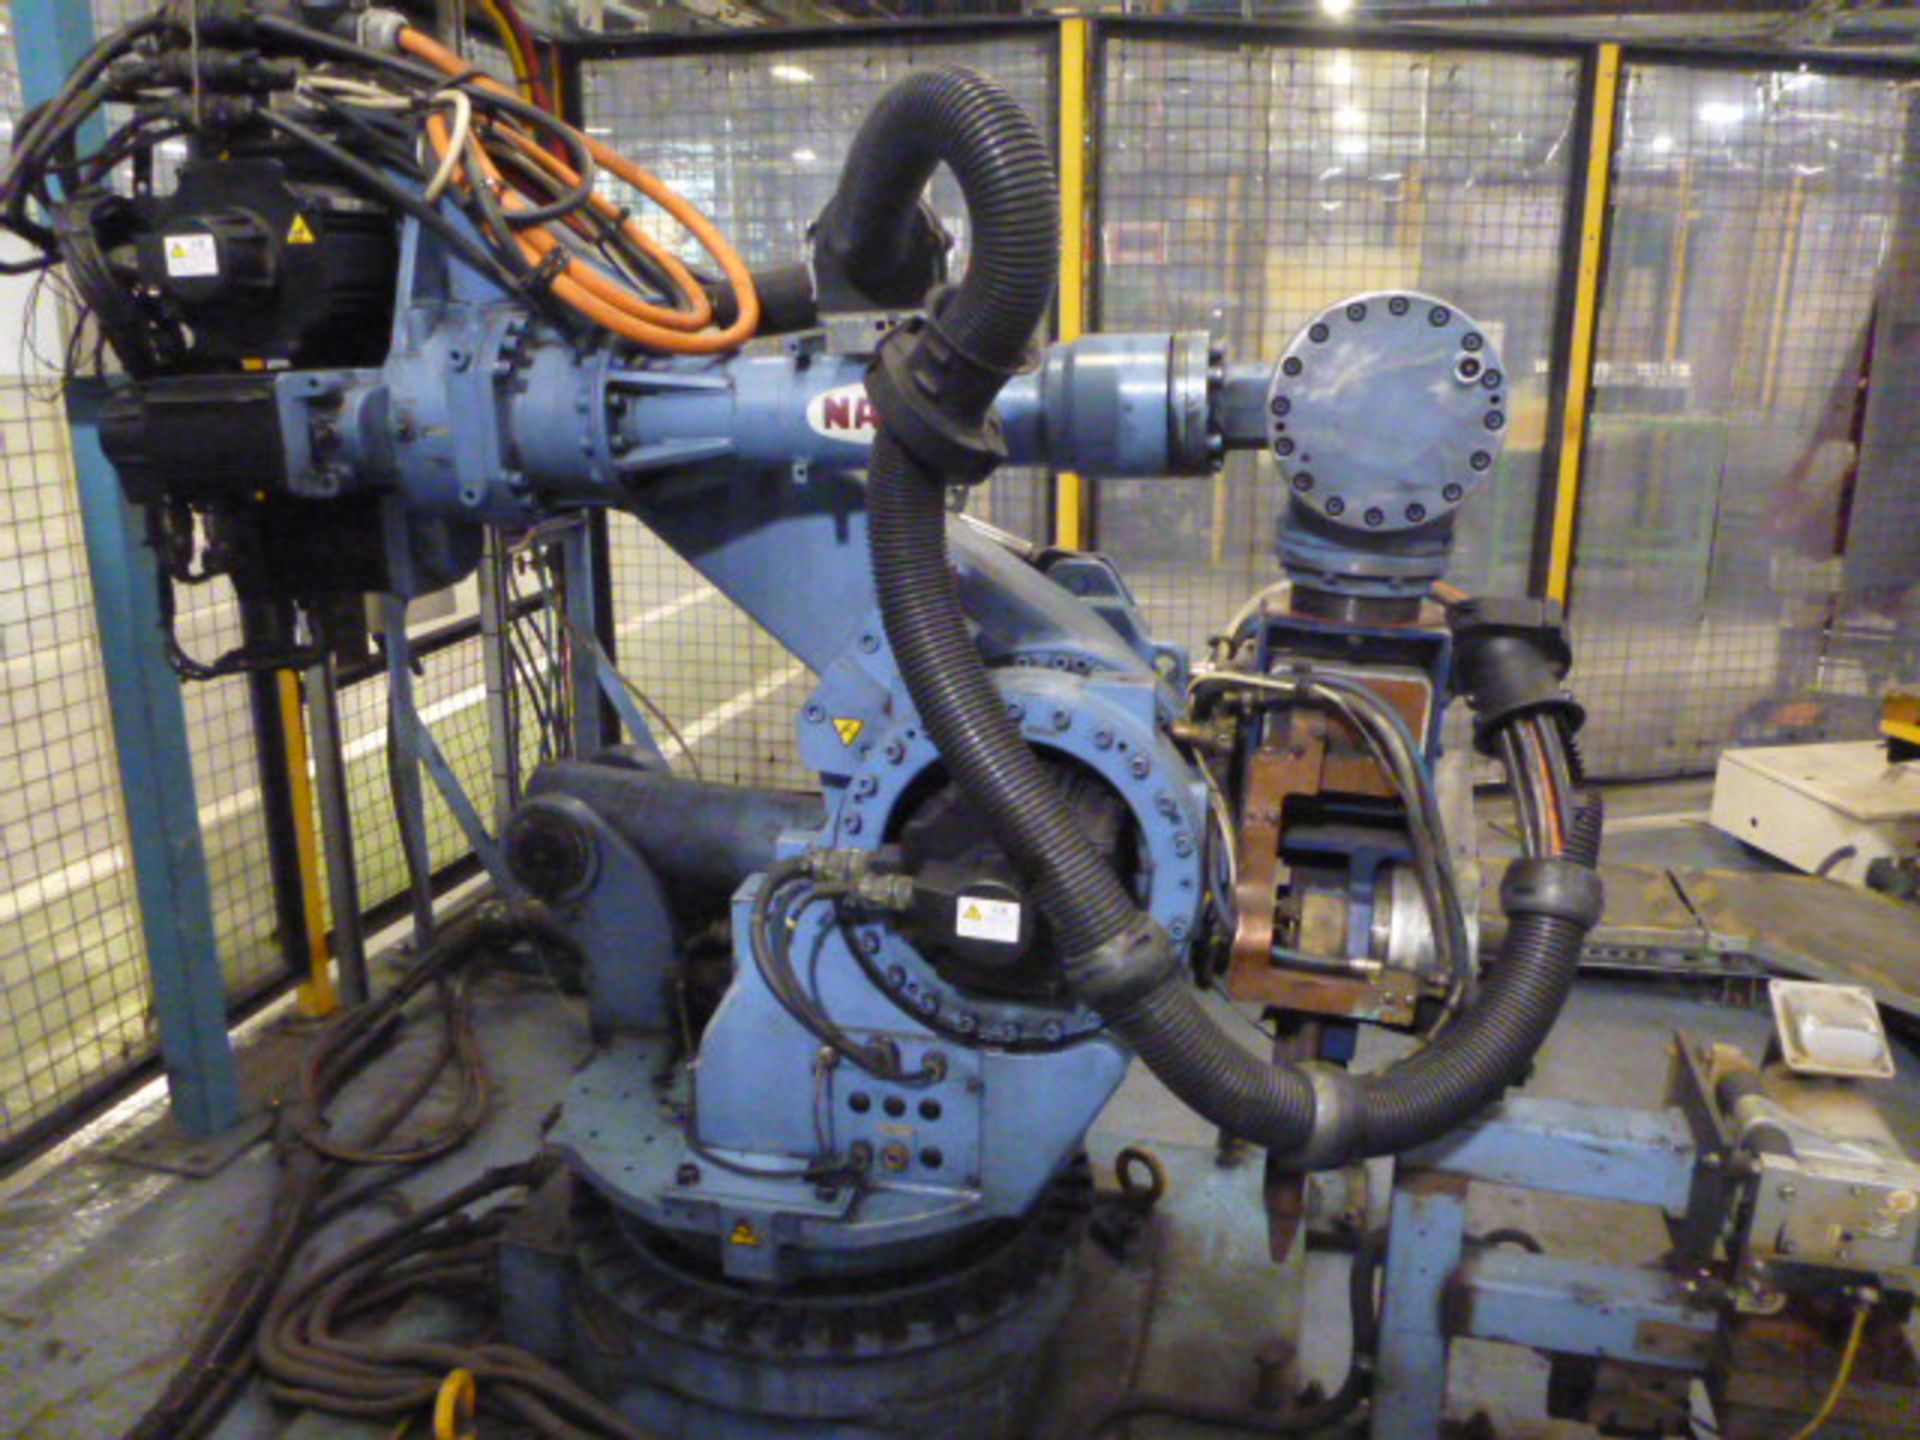 Nachi SF130F-01 Robotic Spot Welding Machine (1997) (Cell AM07) - Image 4 of 8